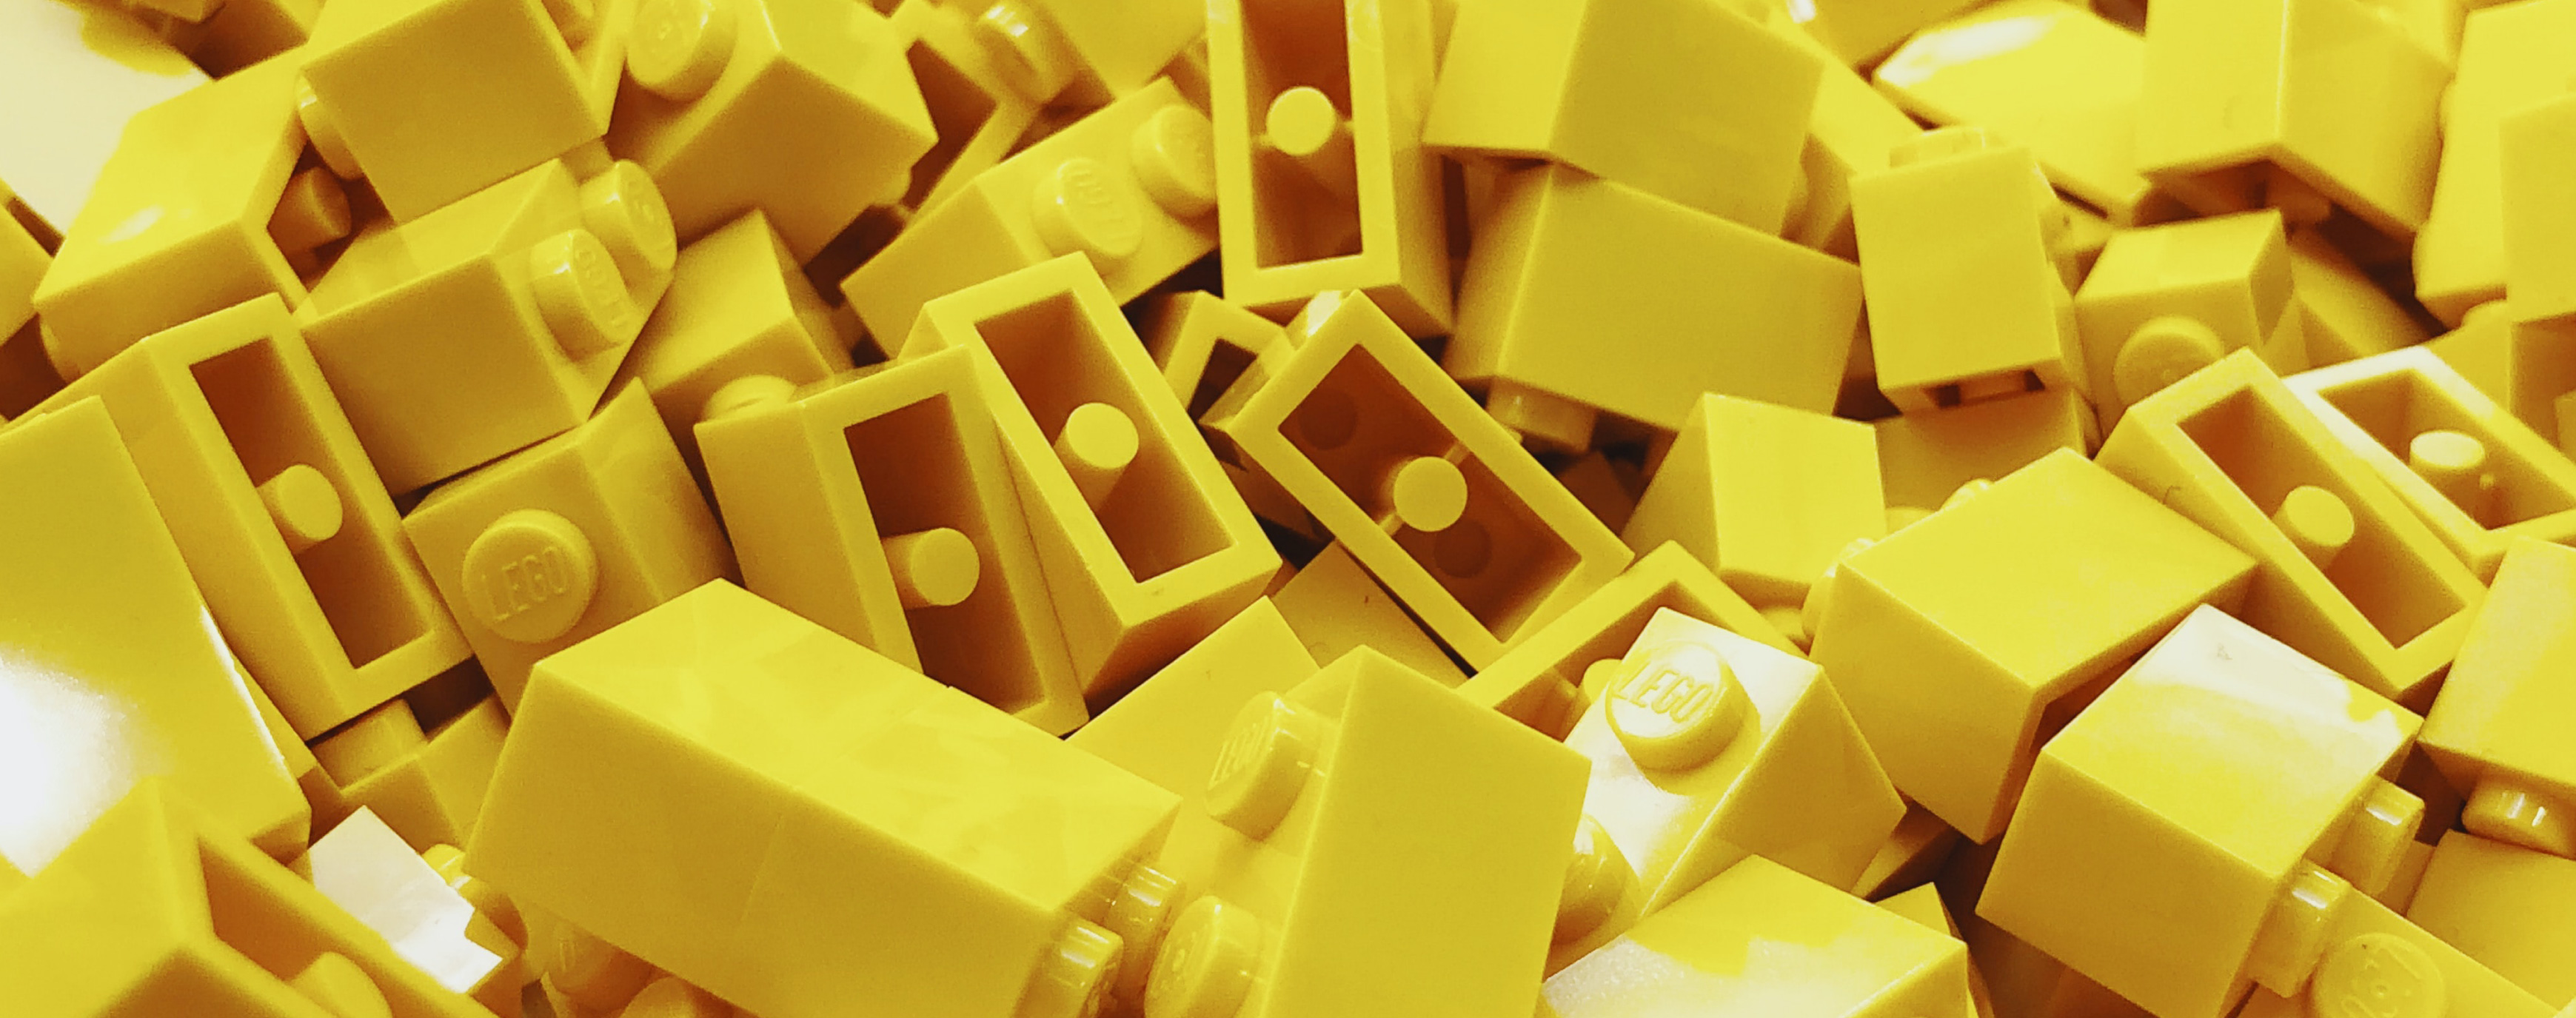 Drizzlin Took Lego As An Example - Drizzlin